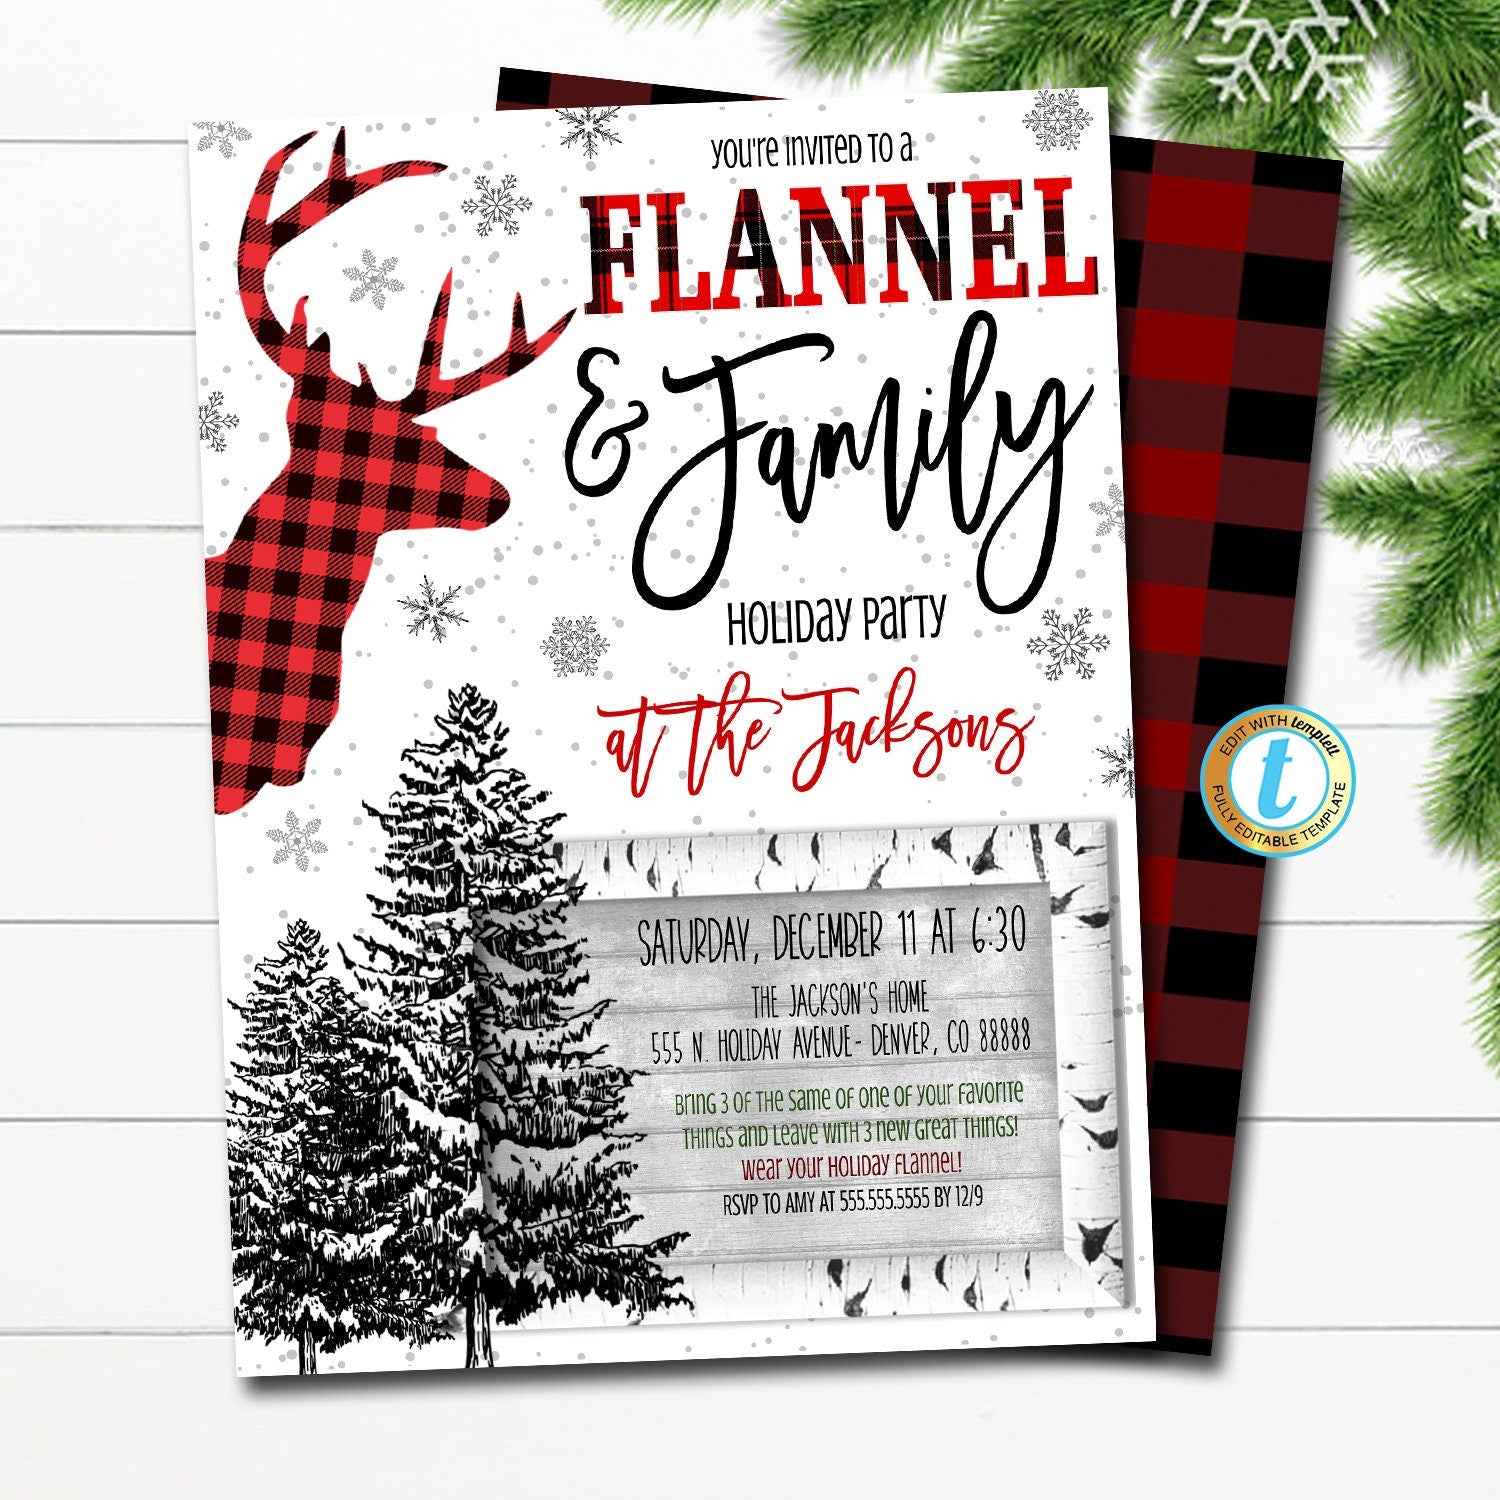 The Ultimate Favorite Things Christmas Pajama Party + FREE Printables